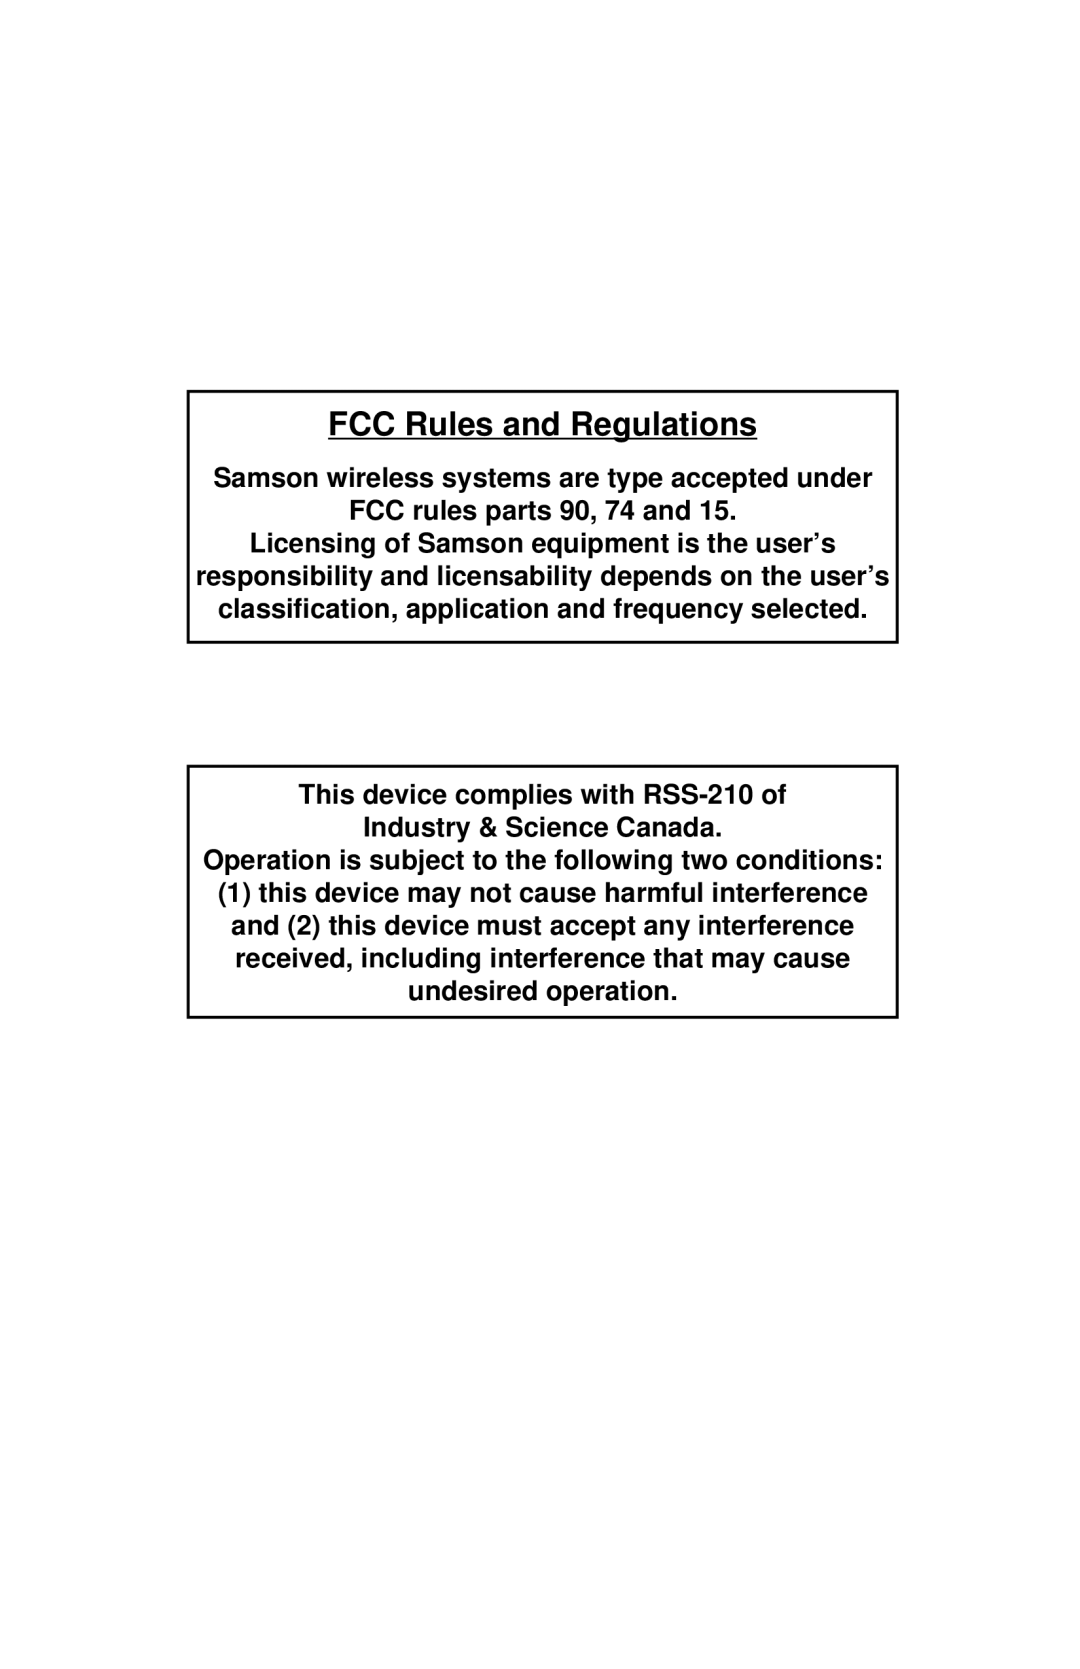 Samson VHF TD Series, VHF Series owner manual FCC Rules and Regulations 